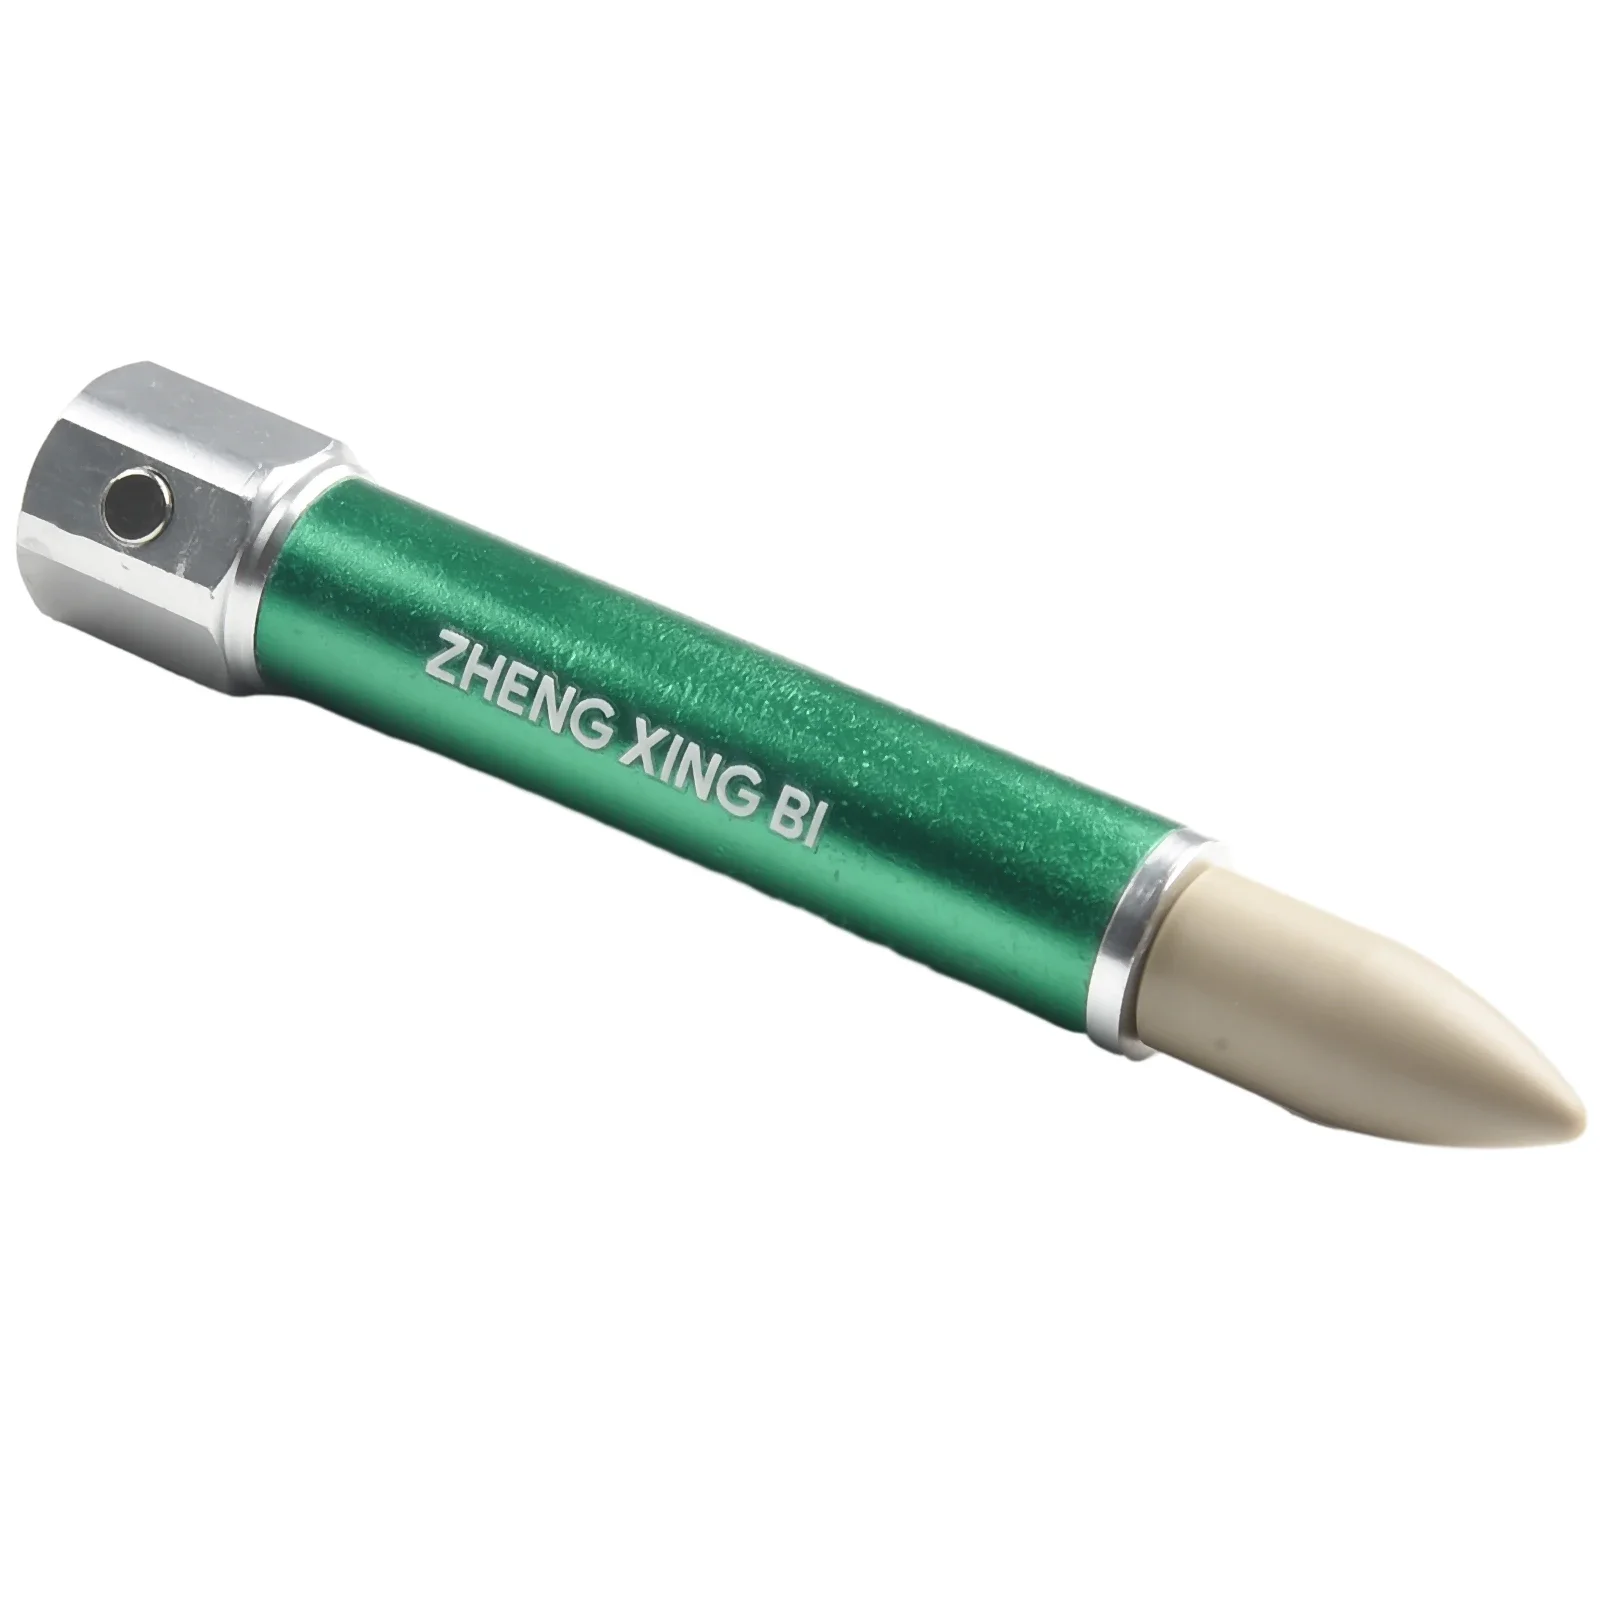 

Car Accessories Knock Tap Down Pen PEI Removable Kits Removable Pen Tap Down Pen Versatile Application For Car